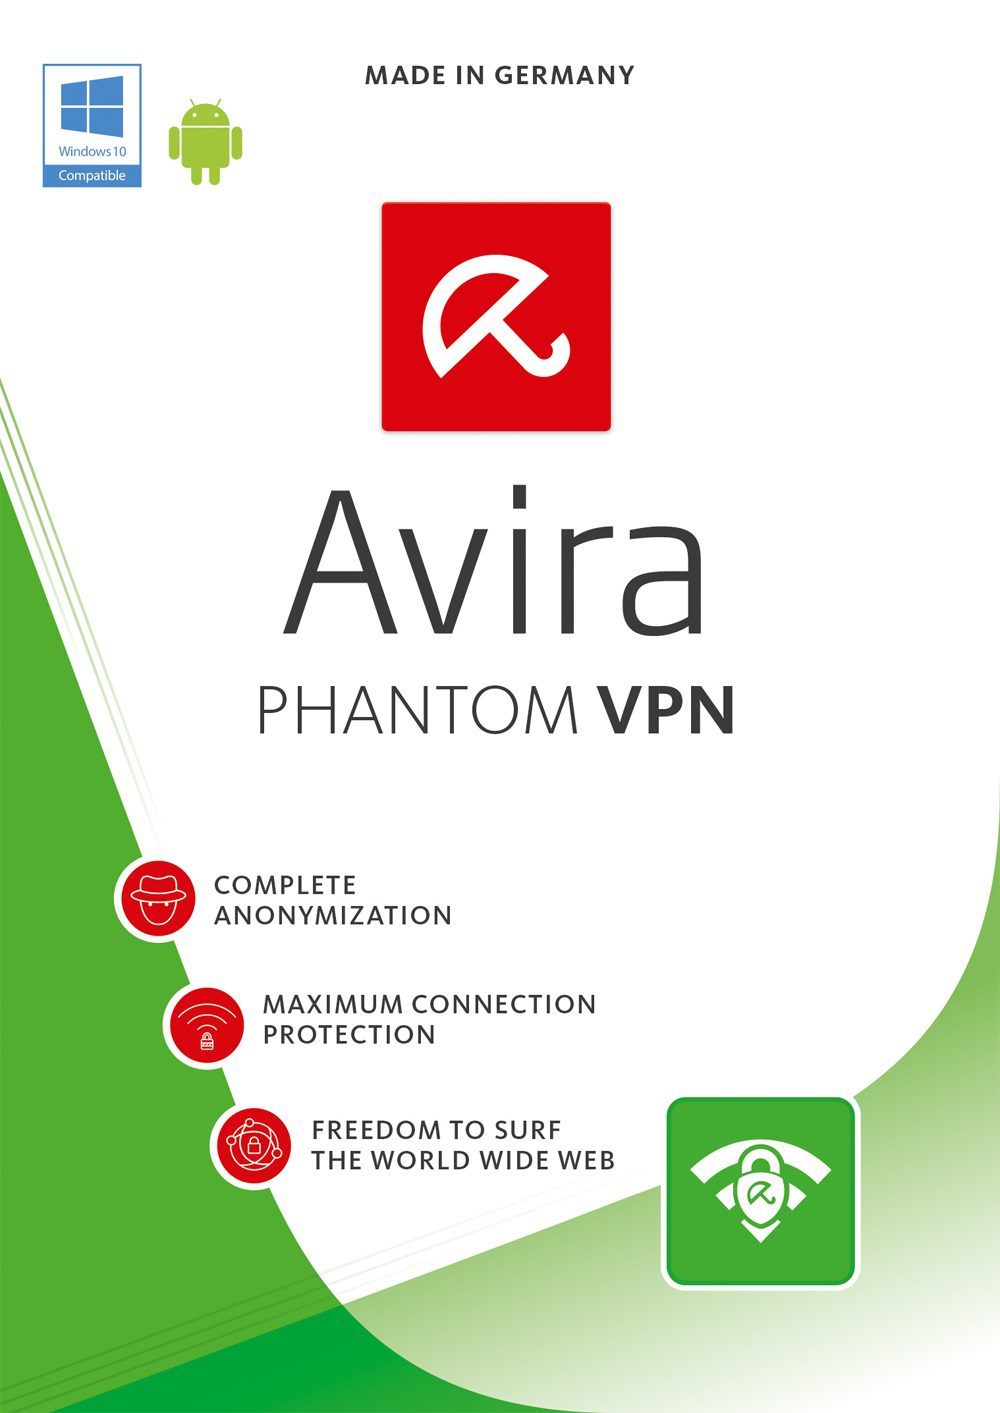 Download Avira Phantom VPN Pro Full Version